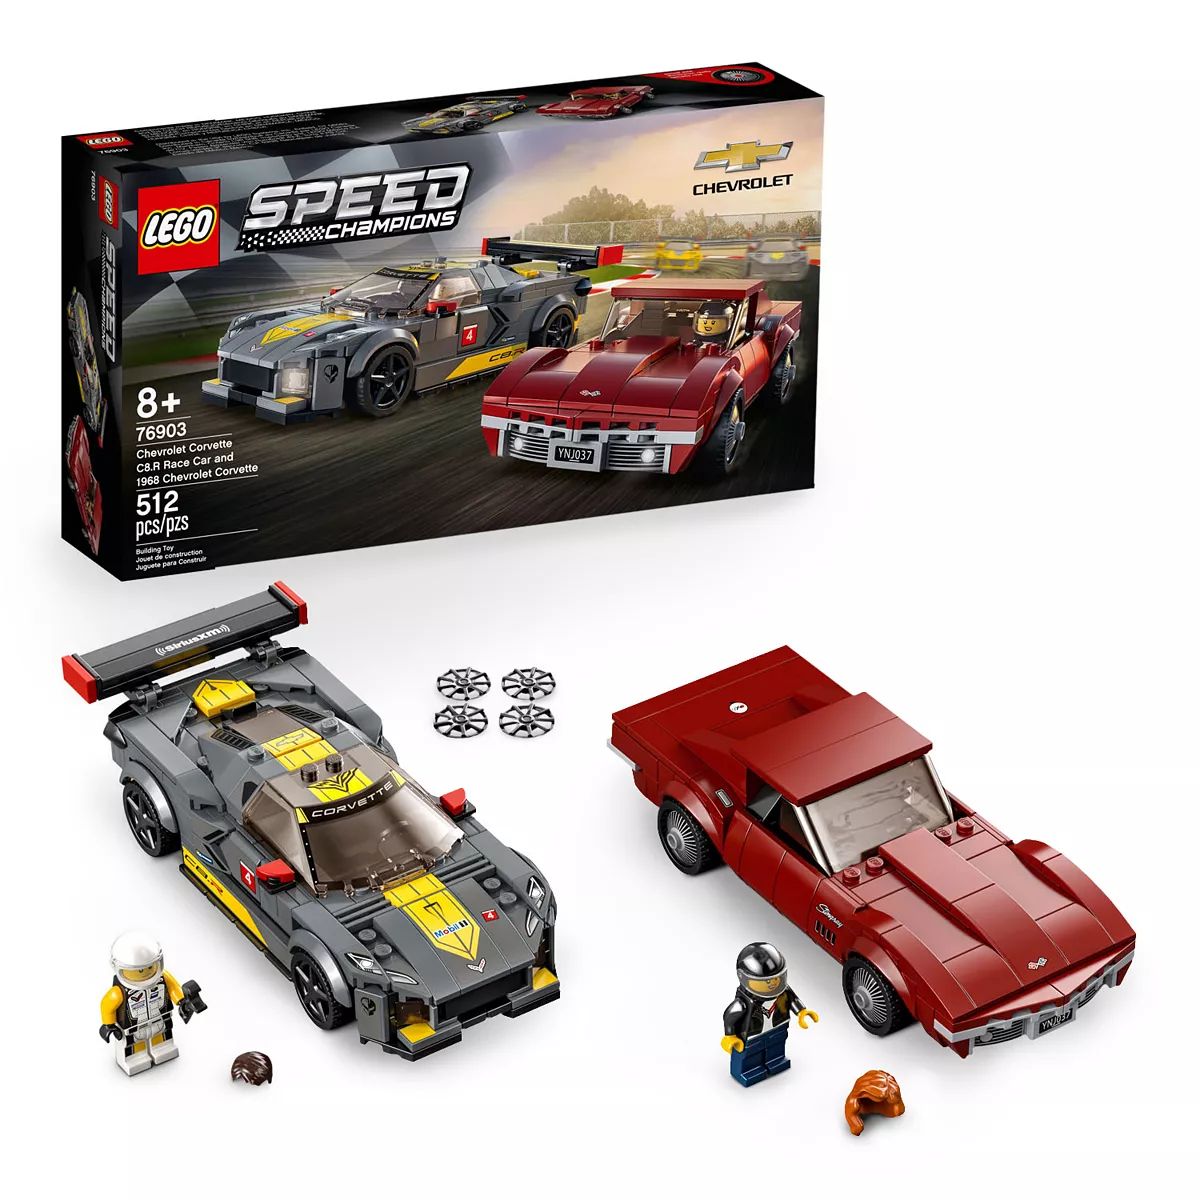 LEGO Speed Champions Chevrolet Corvette C8.R Race Car and 1968 Chevrolet Corvette 76903 Building ... | Kohl's